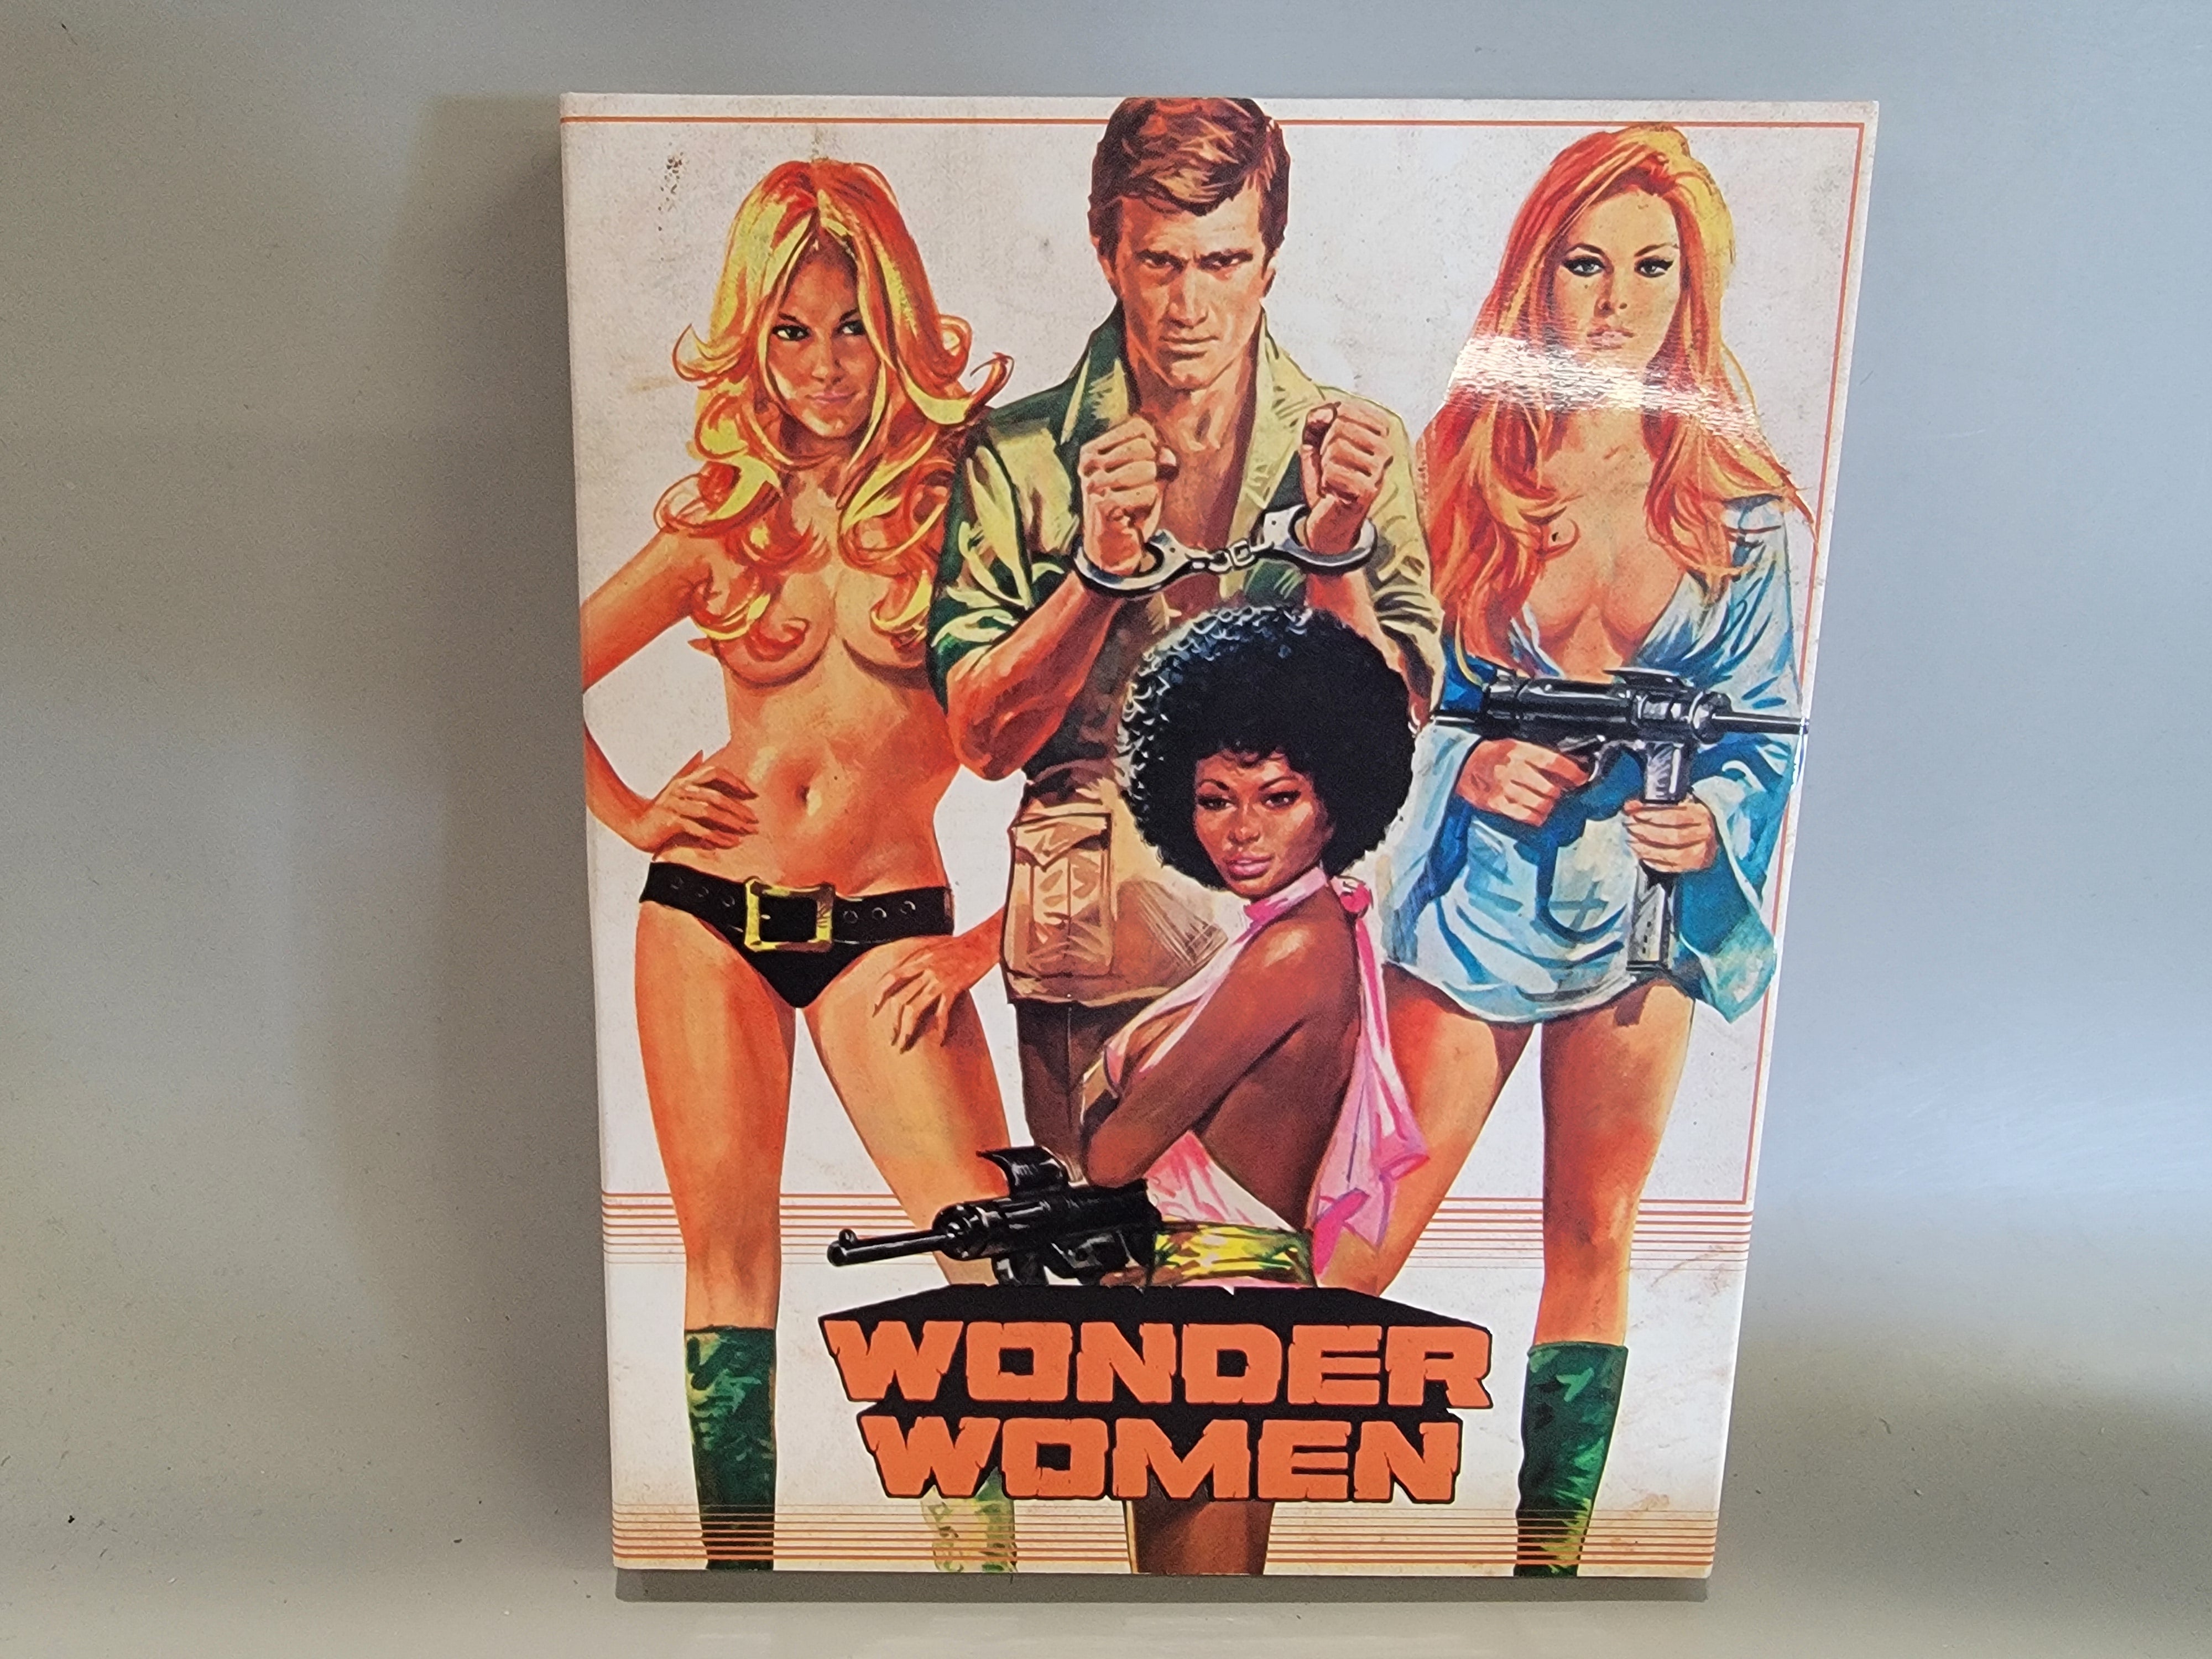 WONDER WOMEN (LIMITED EDITION) BLU-RAY/DVD [USED]